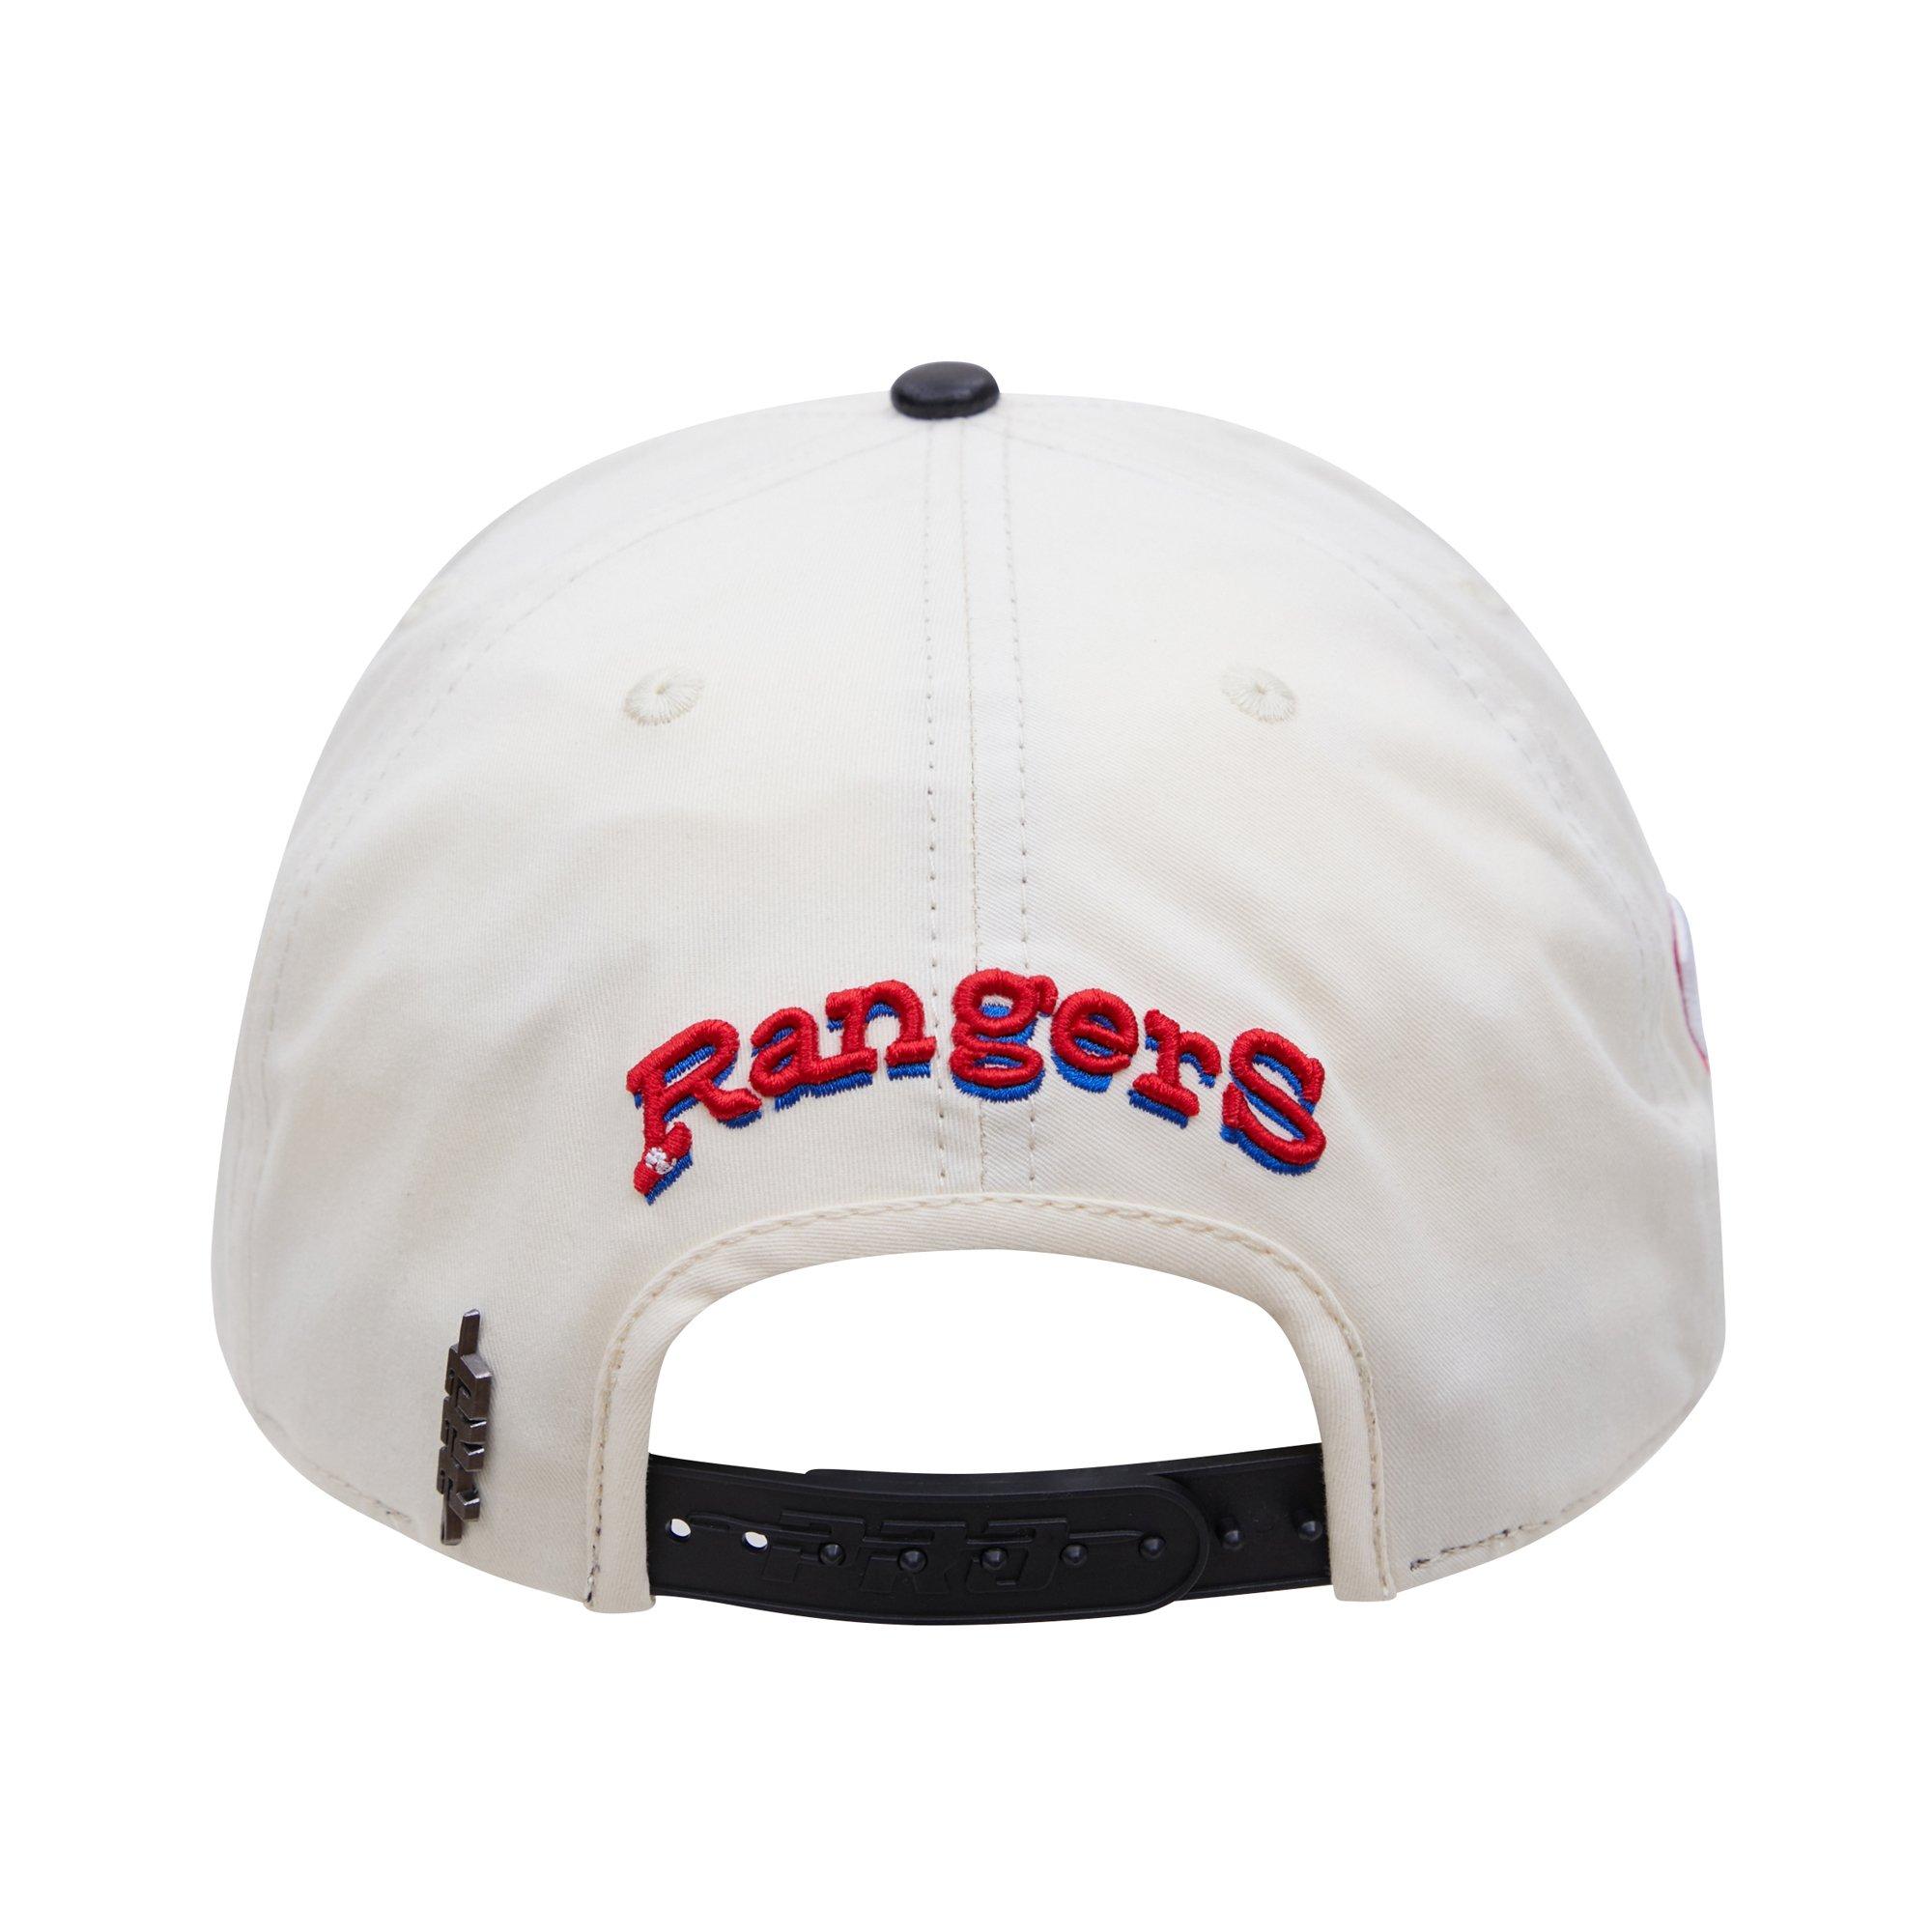 New Era Men's Texas Rangers Fitted Hat - Hibbett